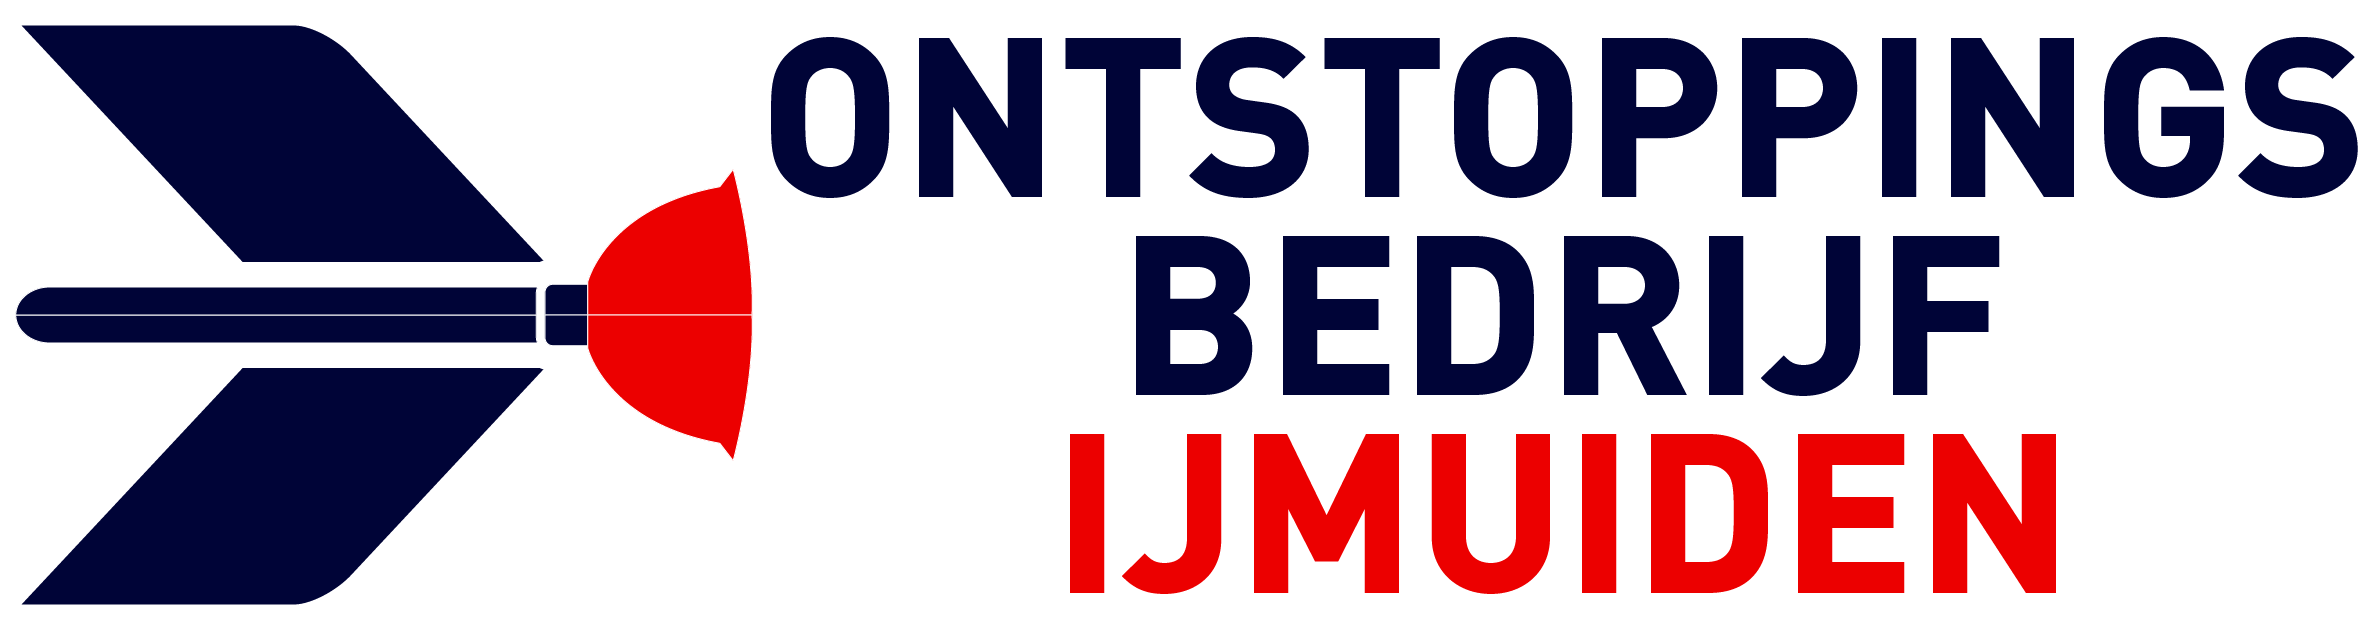 Ontstoppingsbedrijf IJmuiden logo